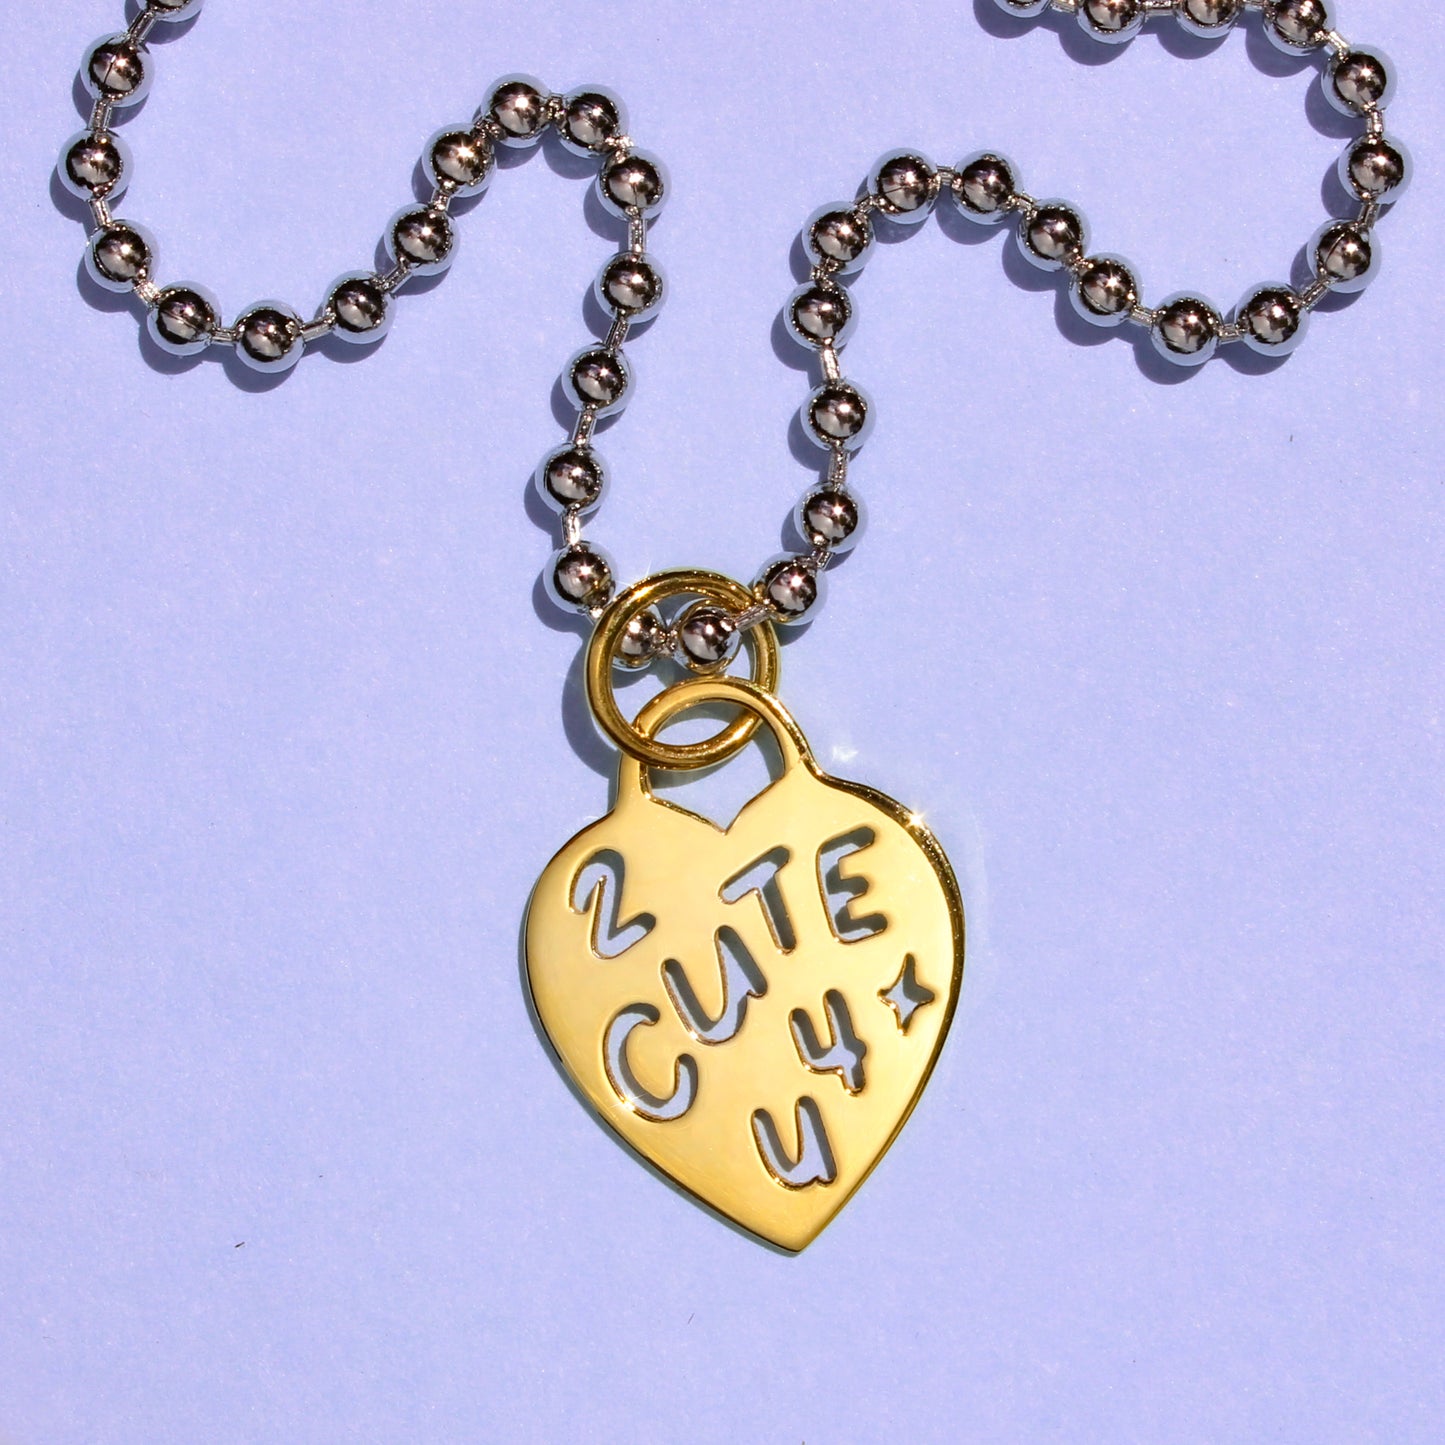 2 CUTE 4 U heart tag necklace